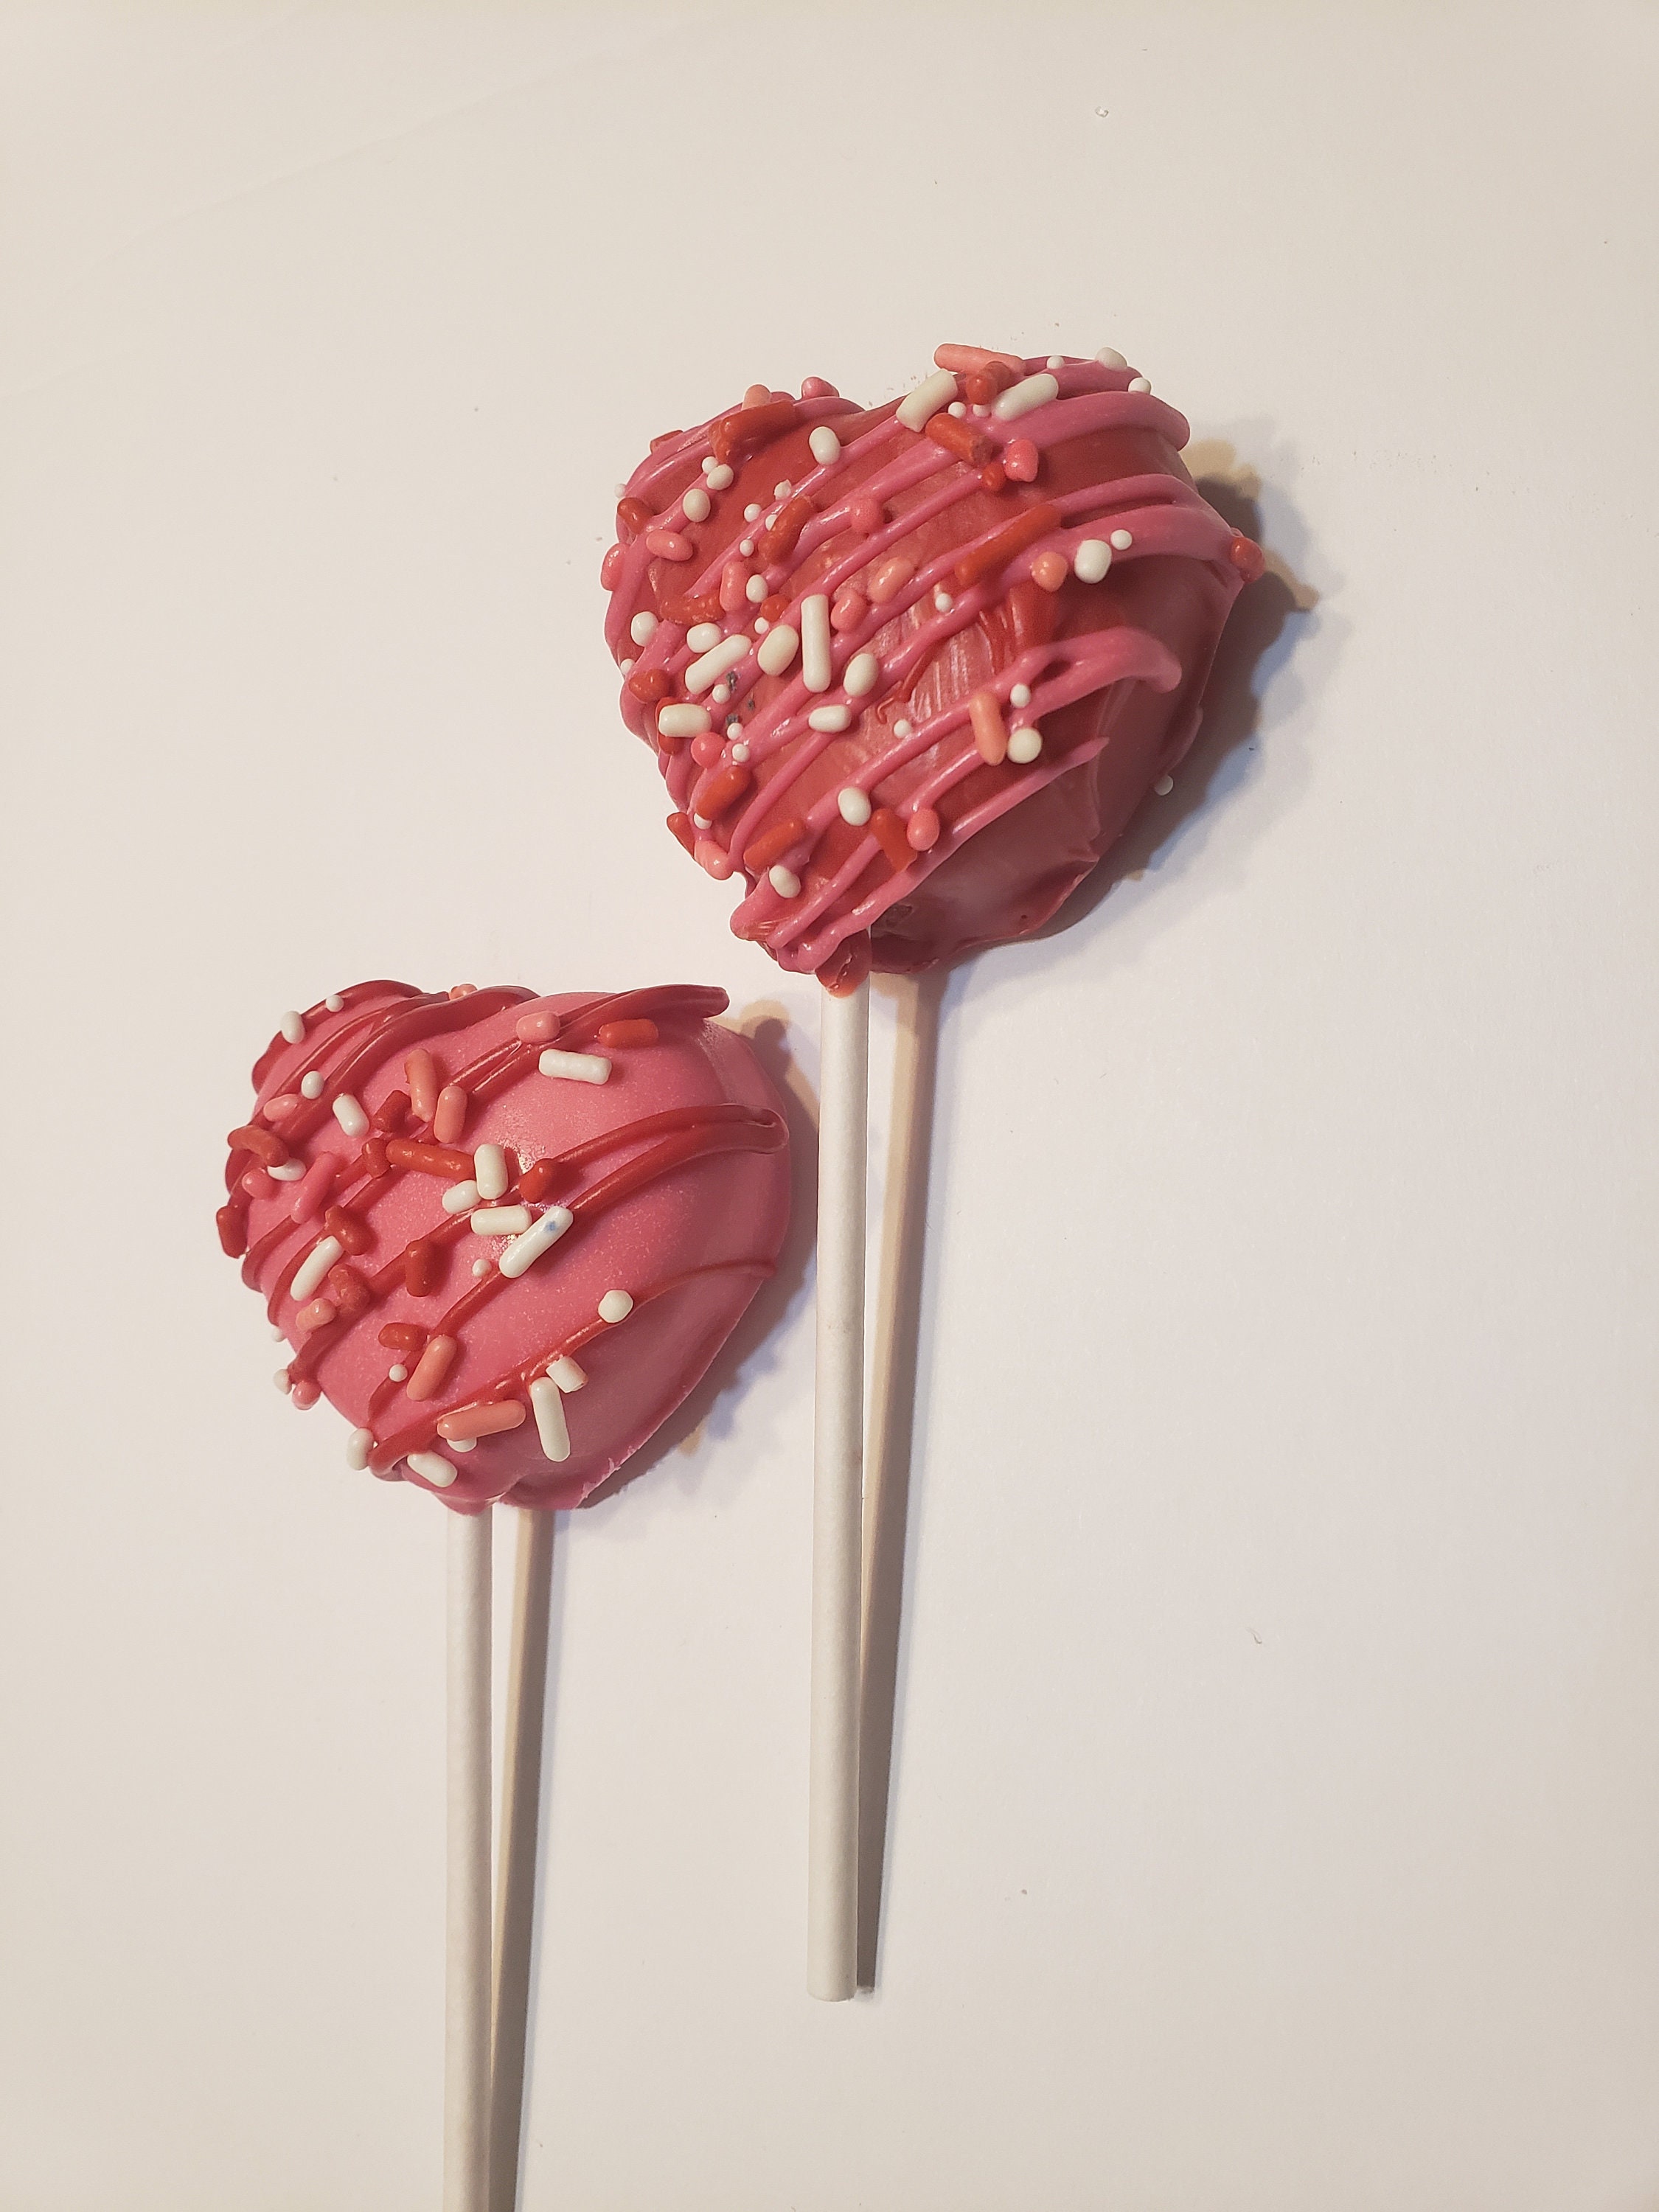 Valentine's Bundle (Lips, Champagne, Heart, Strawberry) - Cake Pop